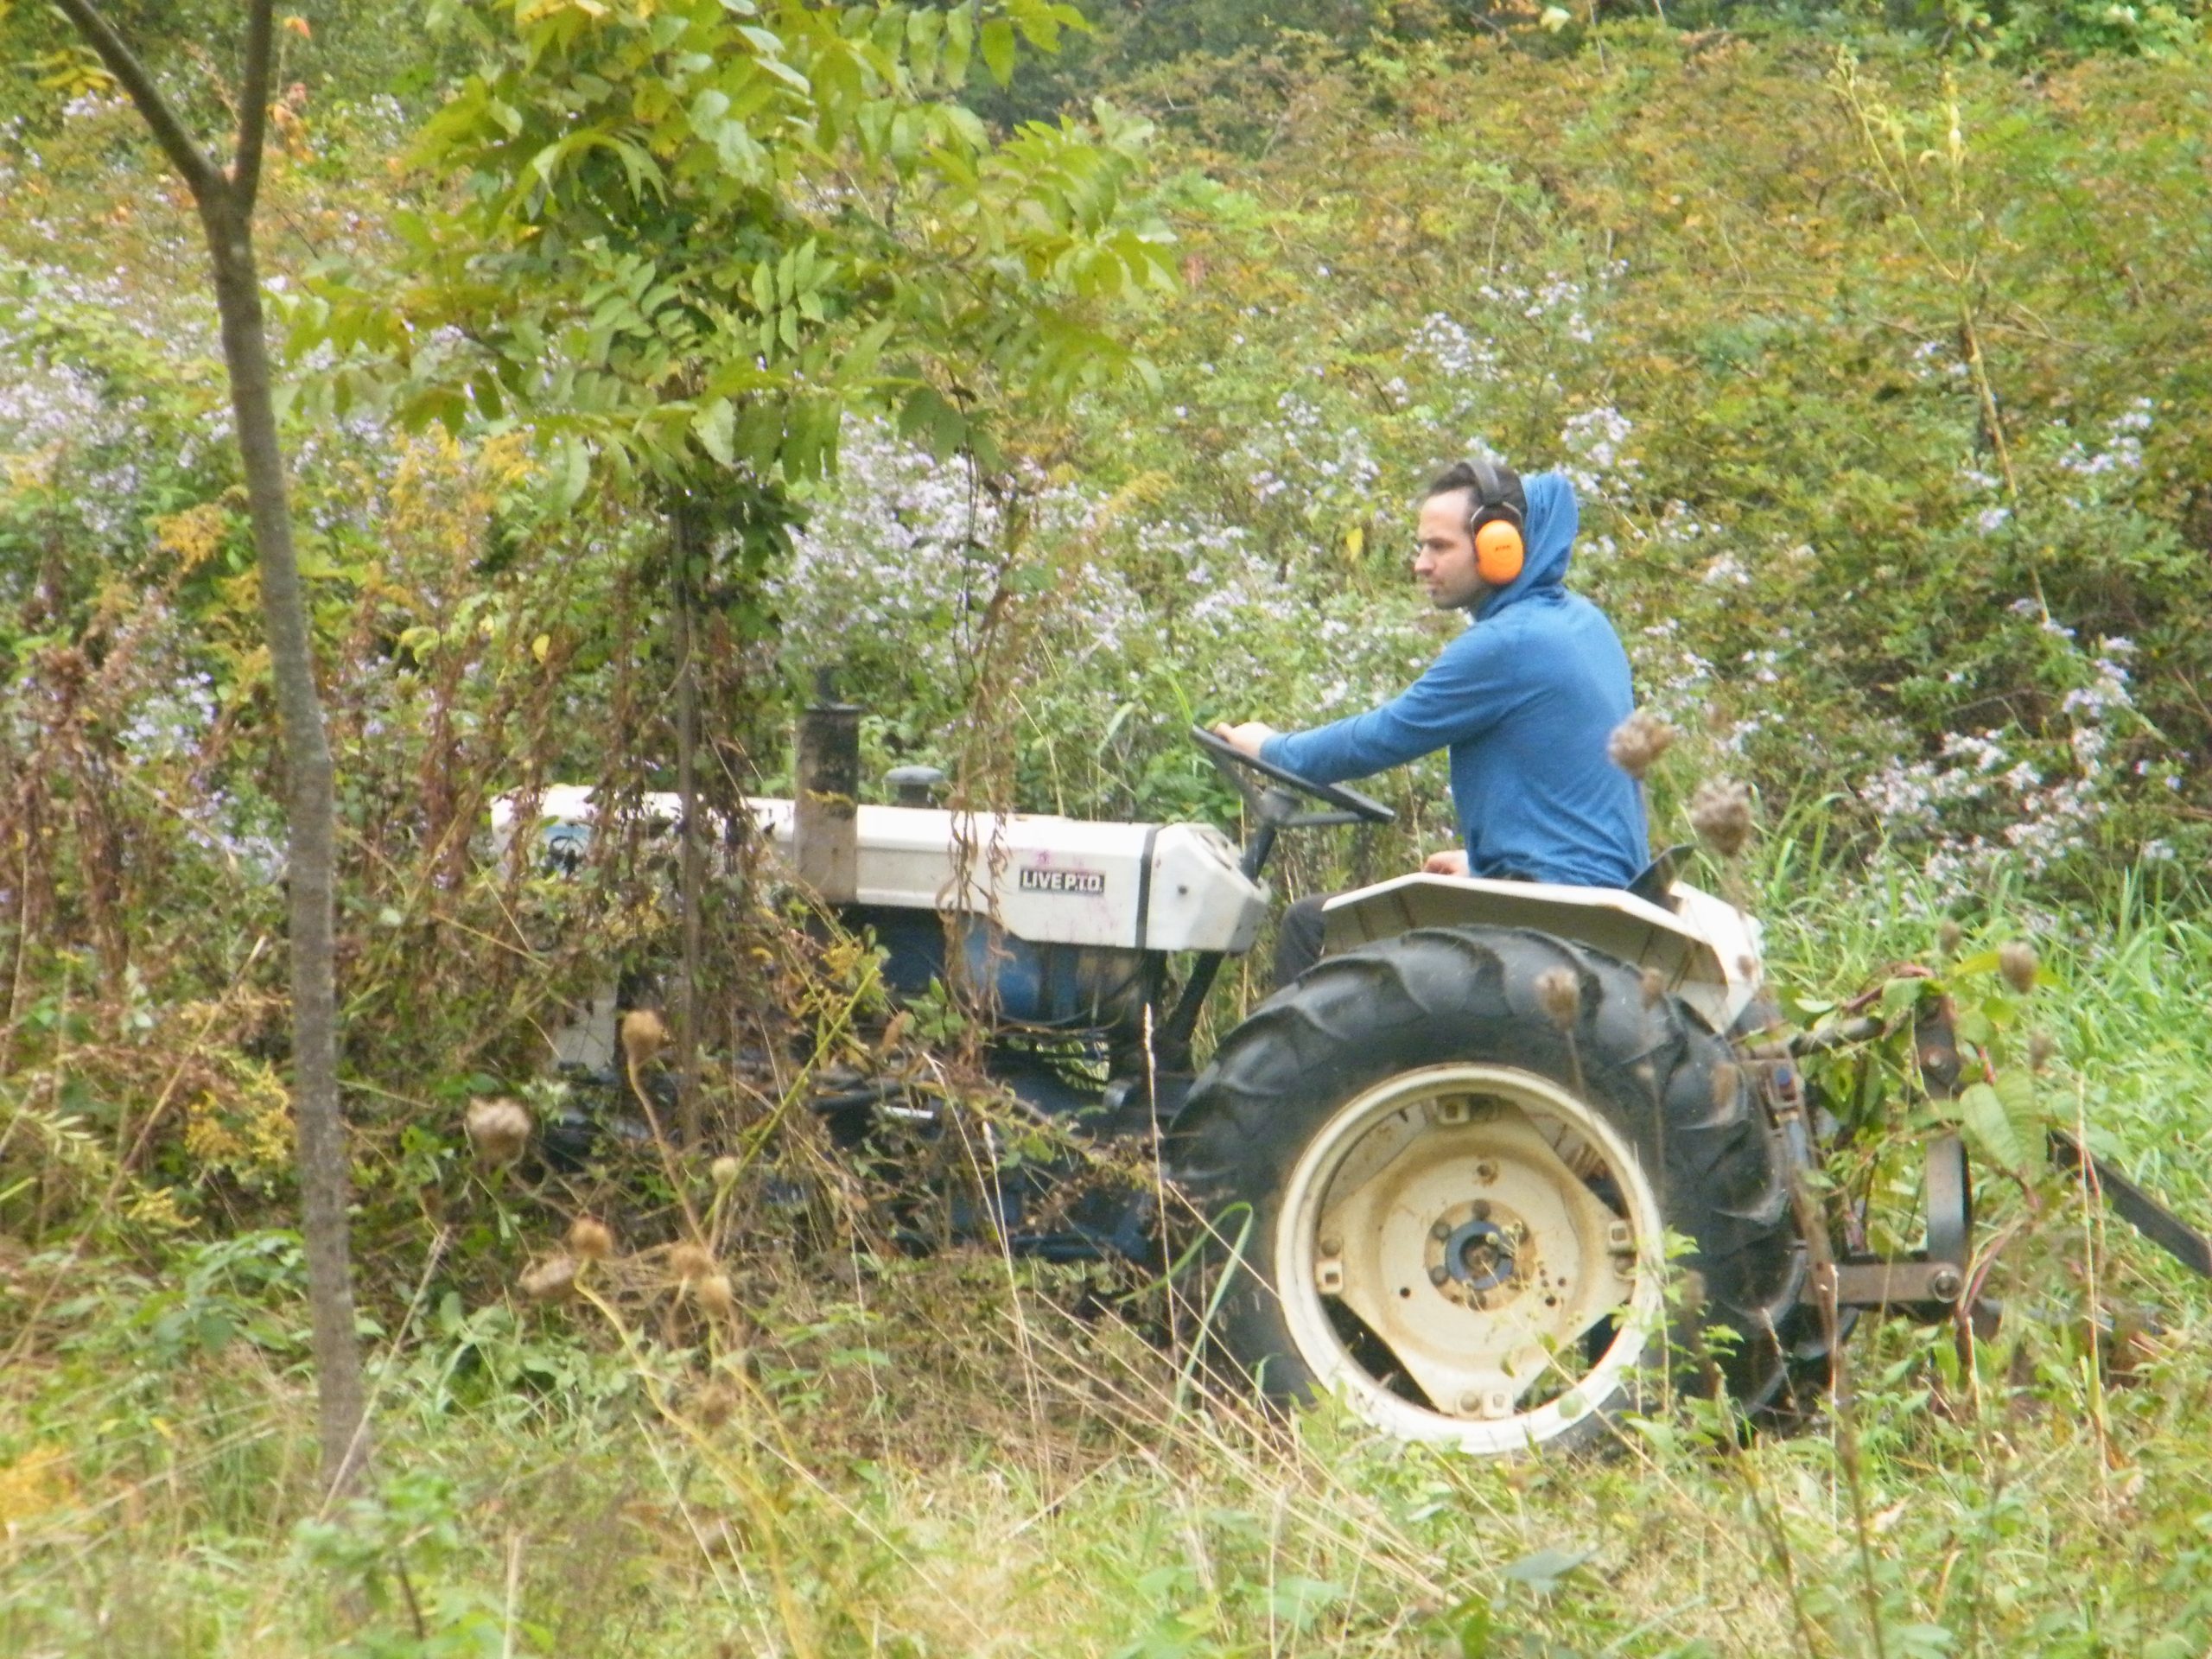 Man in blue sweatshirt drives a seated mower through brush